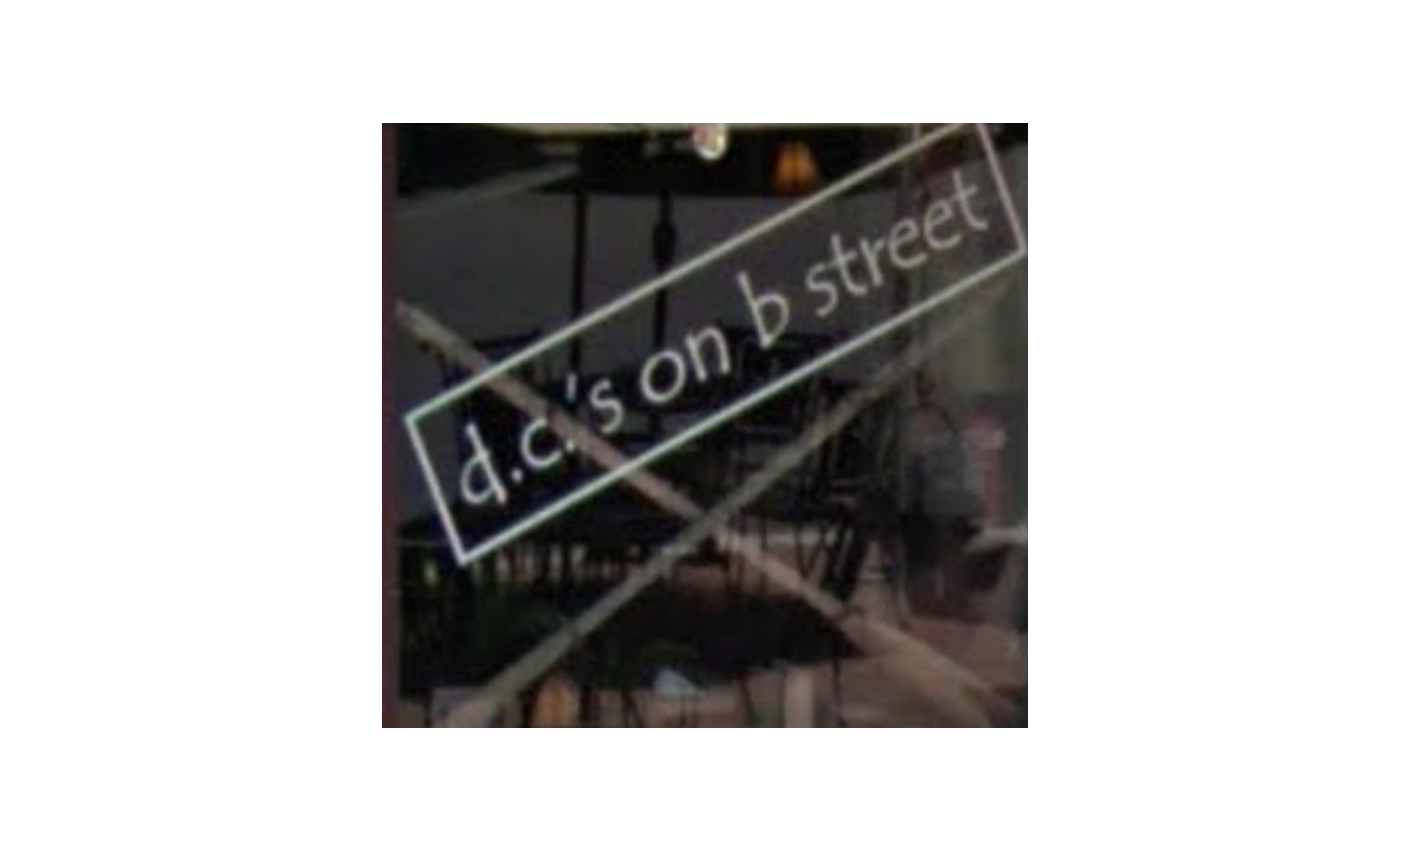 D C's on B Street